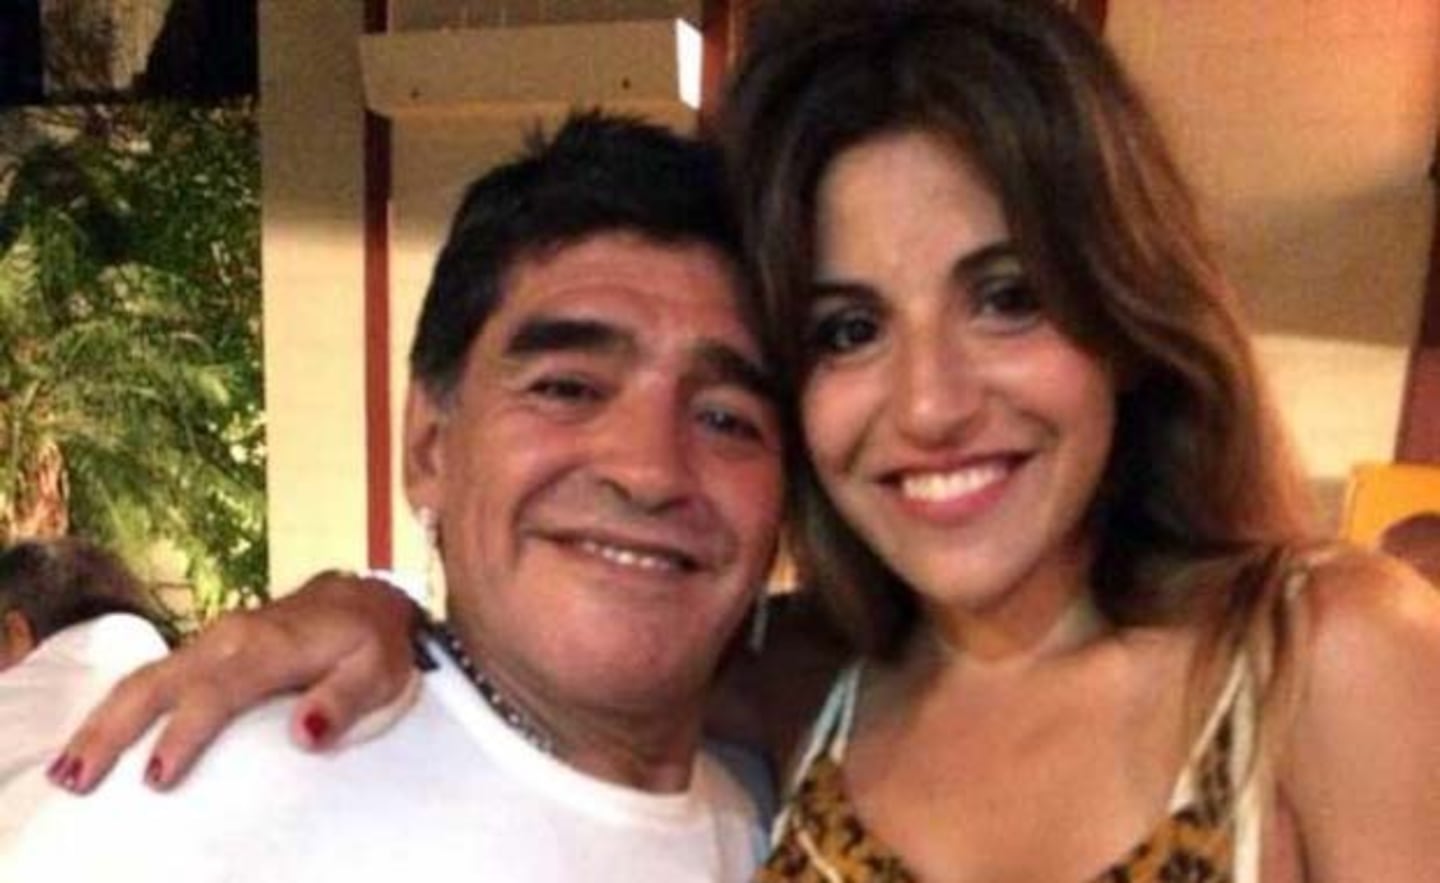 Diego Armando Maradona y Gianinna Maradona, unidos a pesar de la revocatoria de poderes. (Foto: Web)